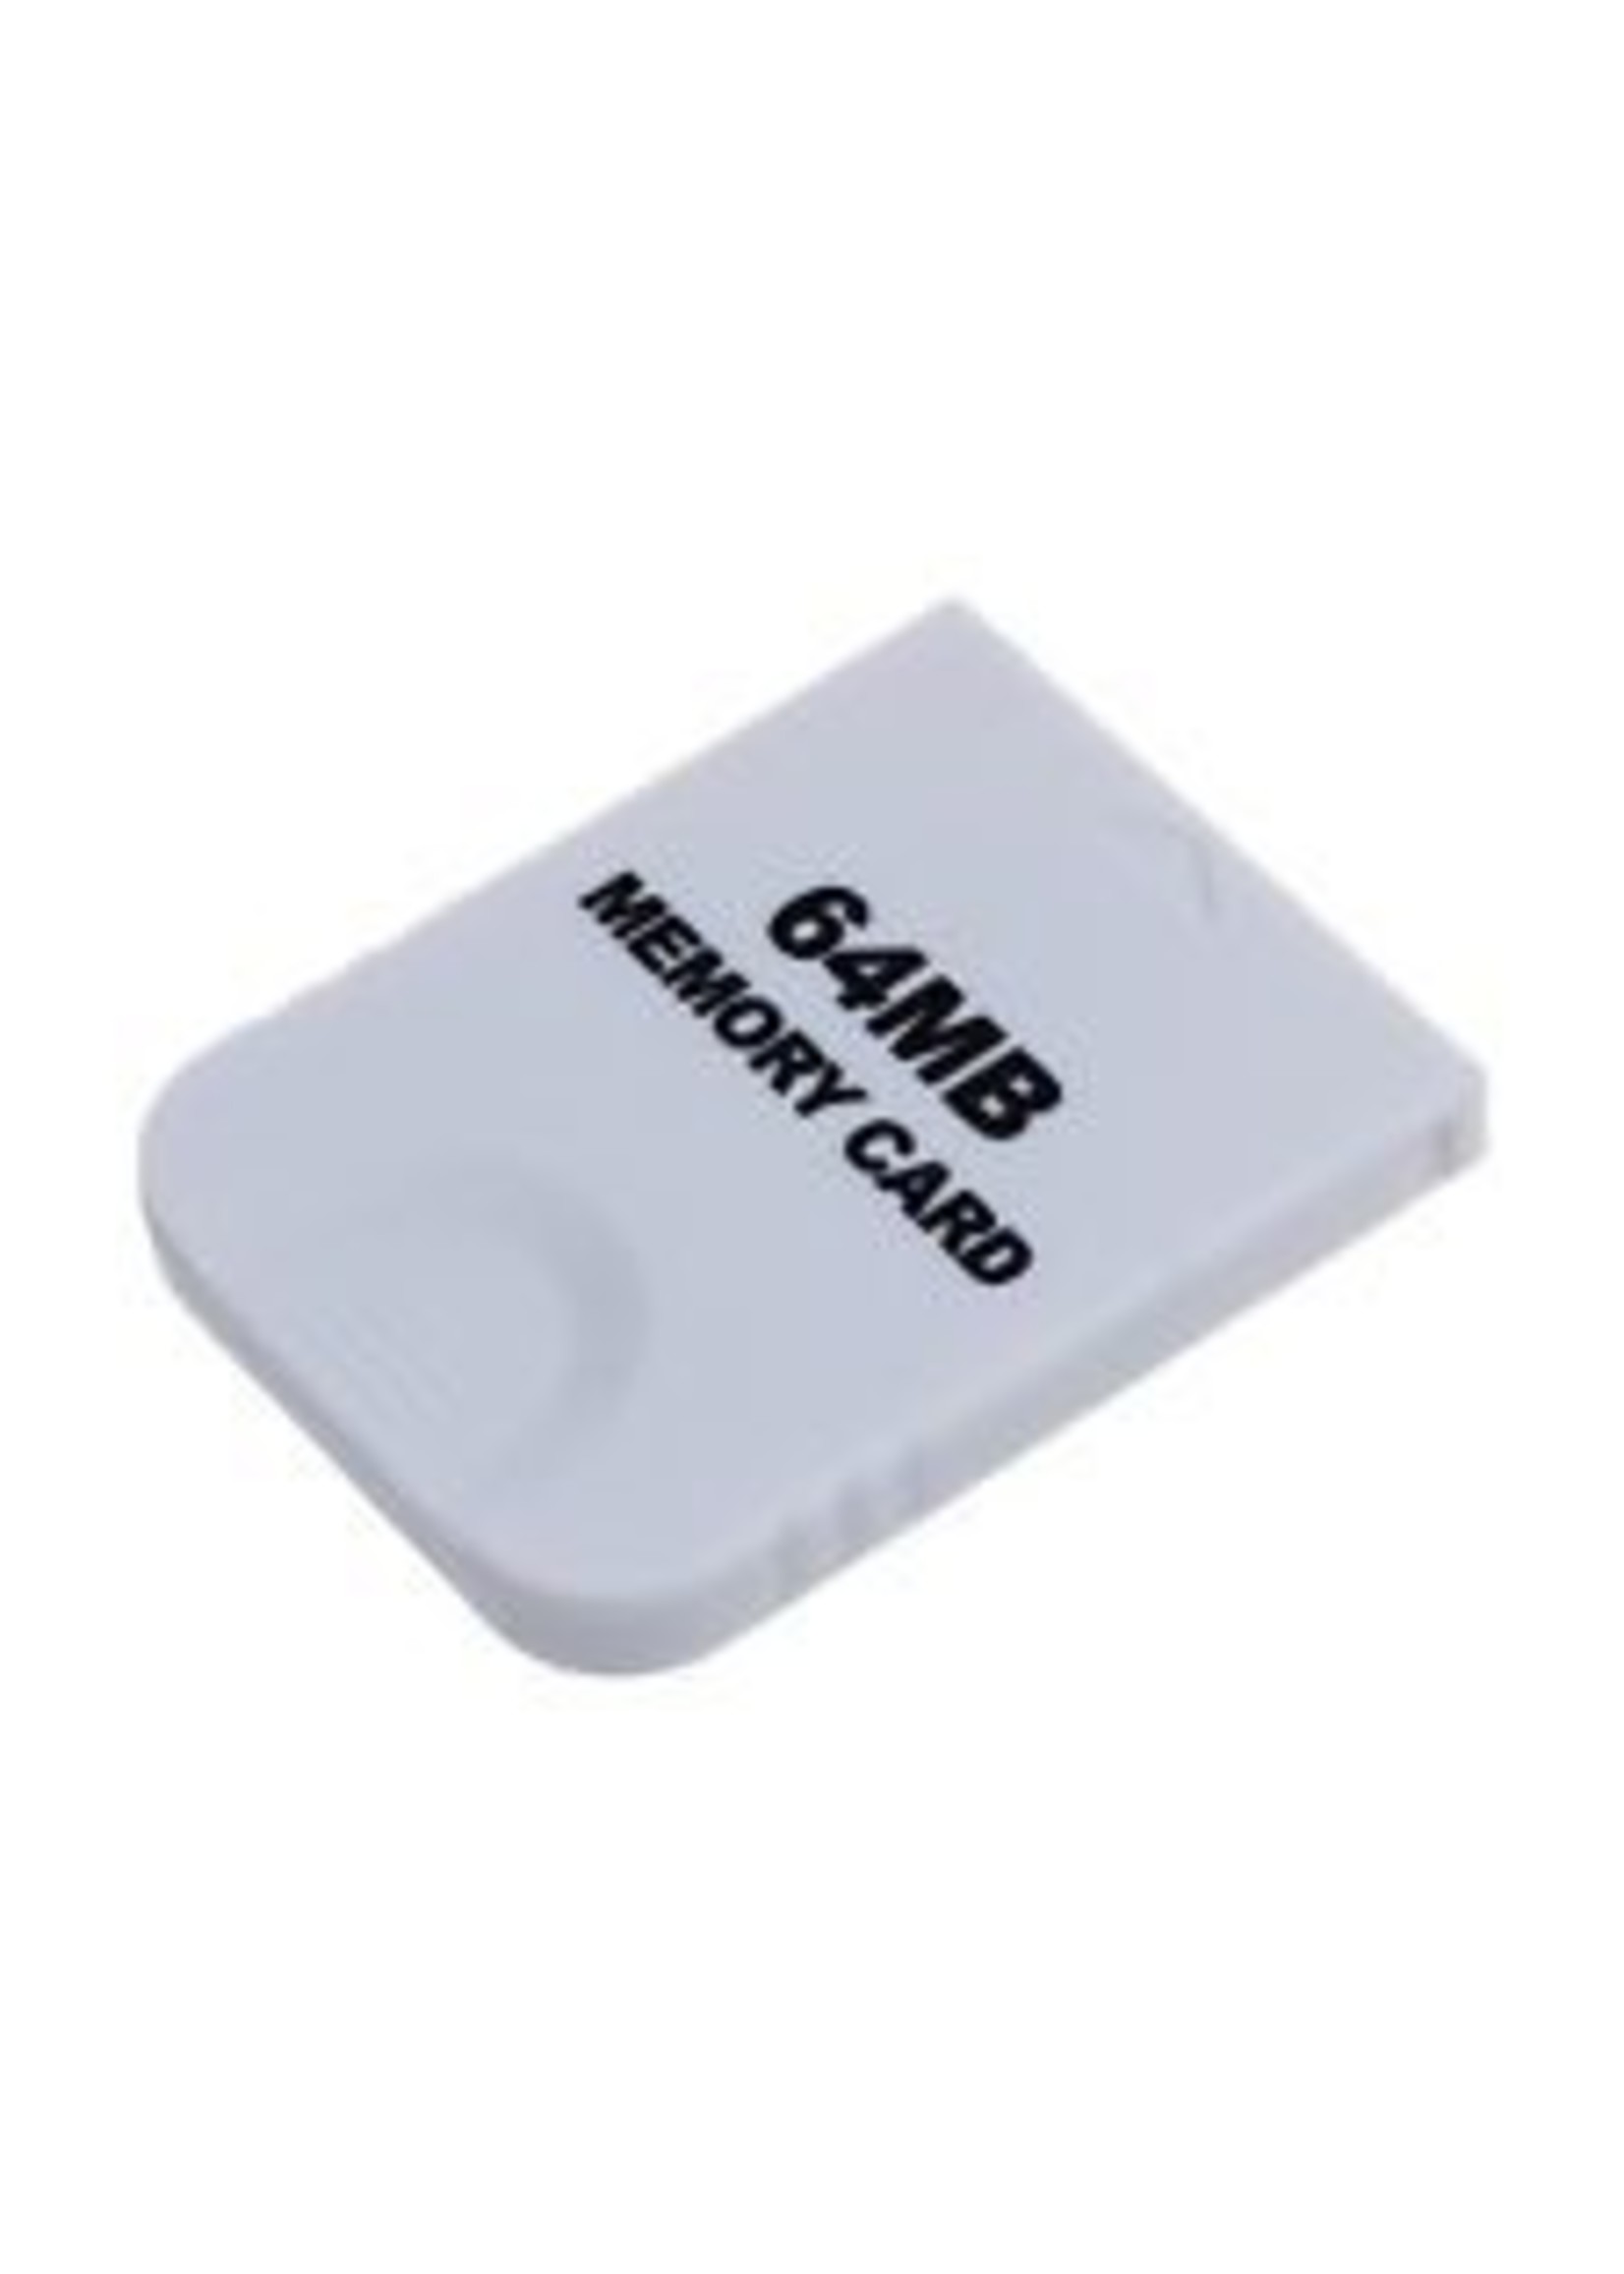 Nintendo Gamecube GameCube 64 MB Memory Card